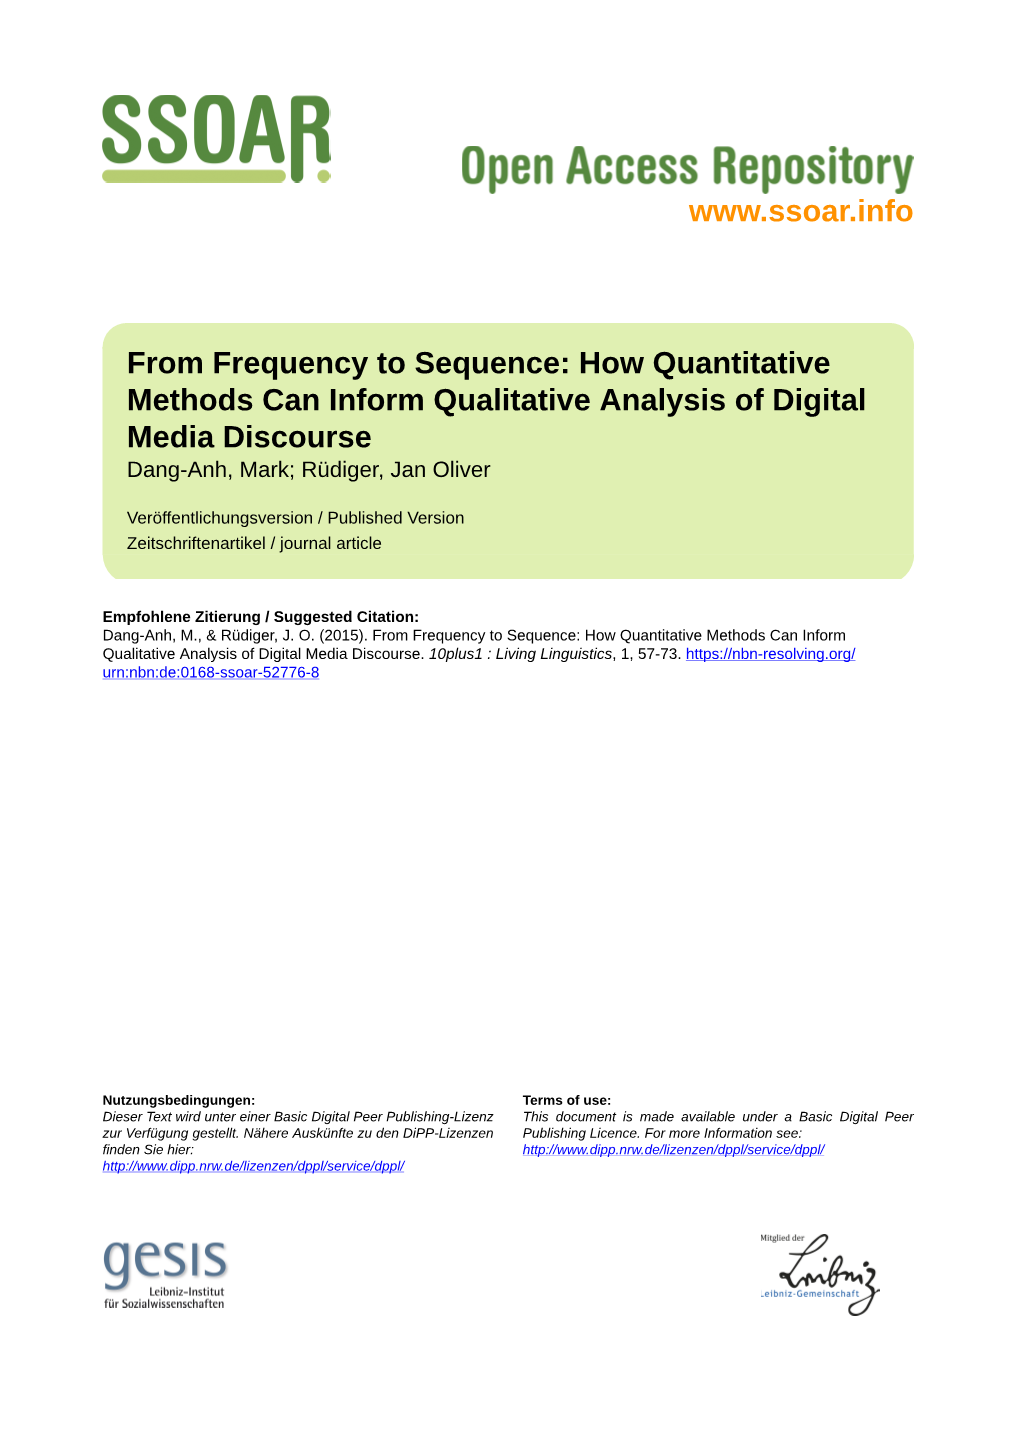 How Quantitative Methods Can Inform Qualitative Analysis of Digital Media Discourse Dang-Anh, Mark; Rüdiger, Jan Oliver